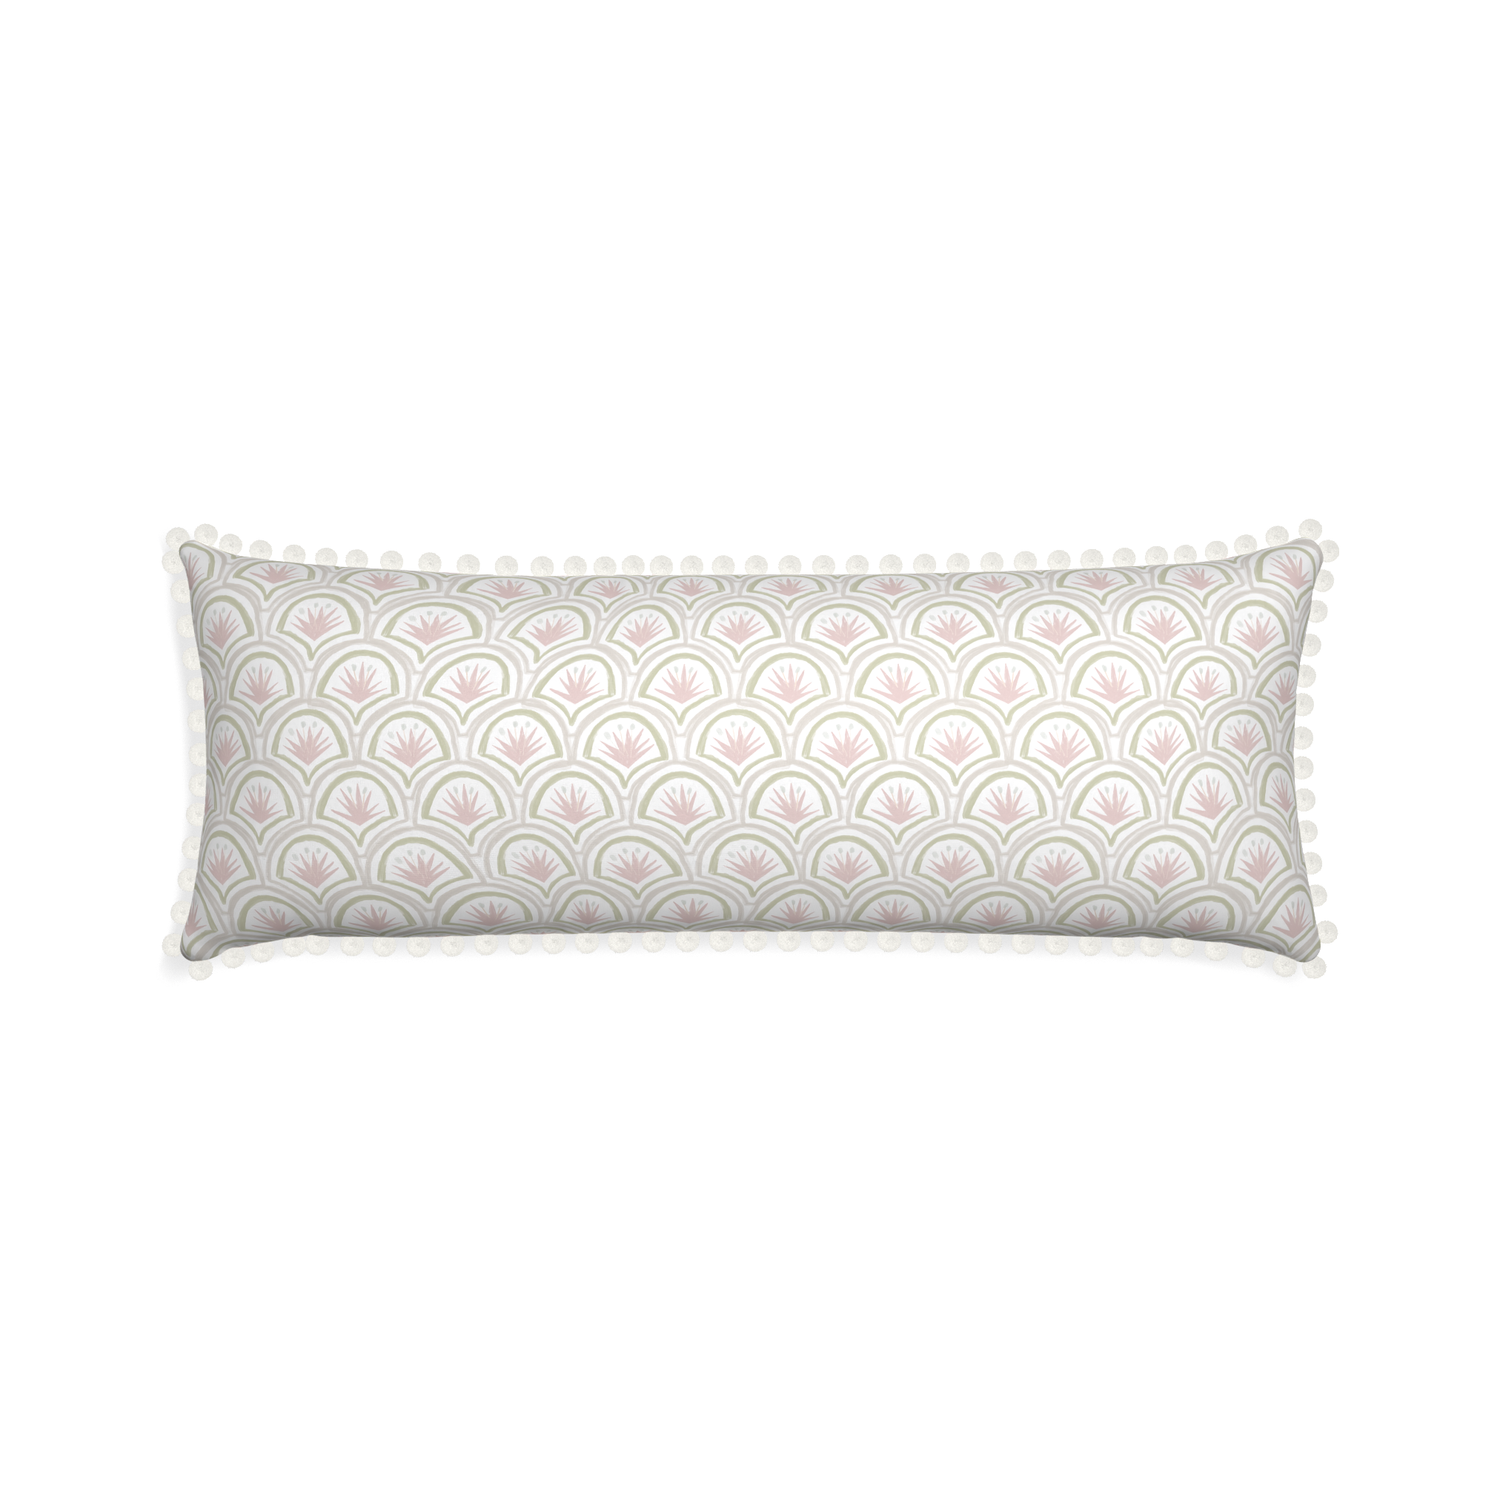 Xl-lumbar thatcher rose custom pillow with snow pom pom on white background